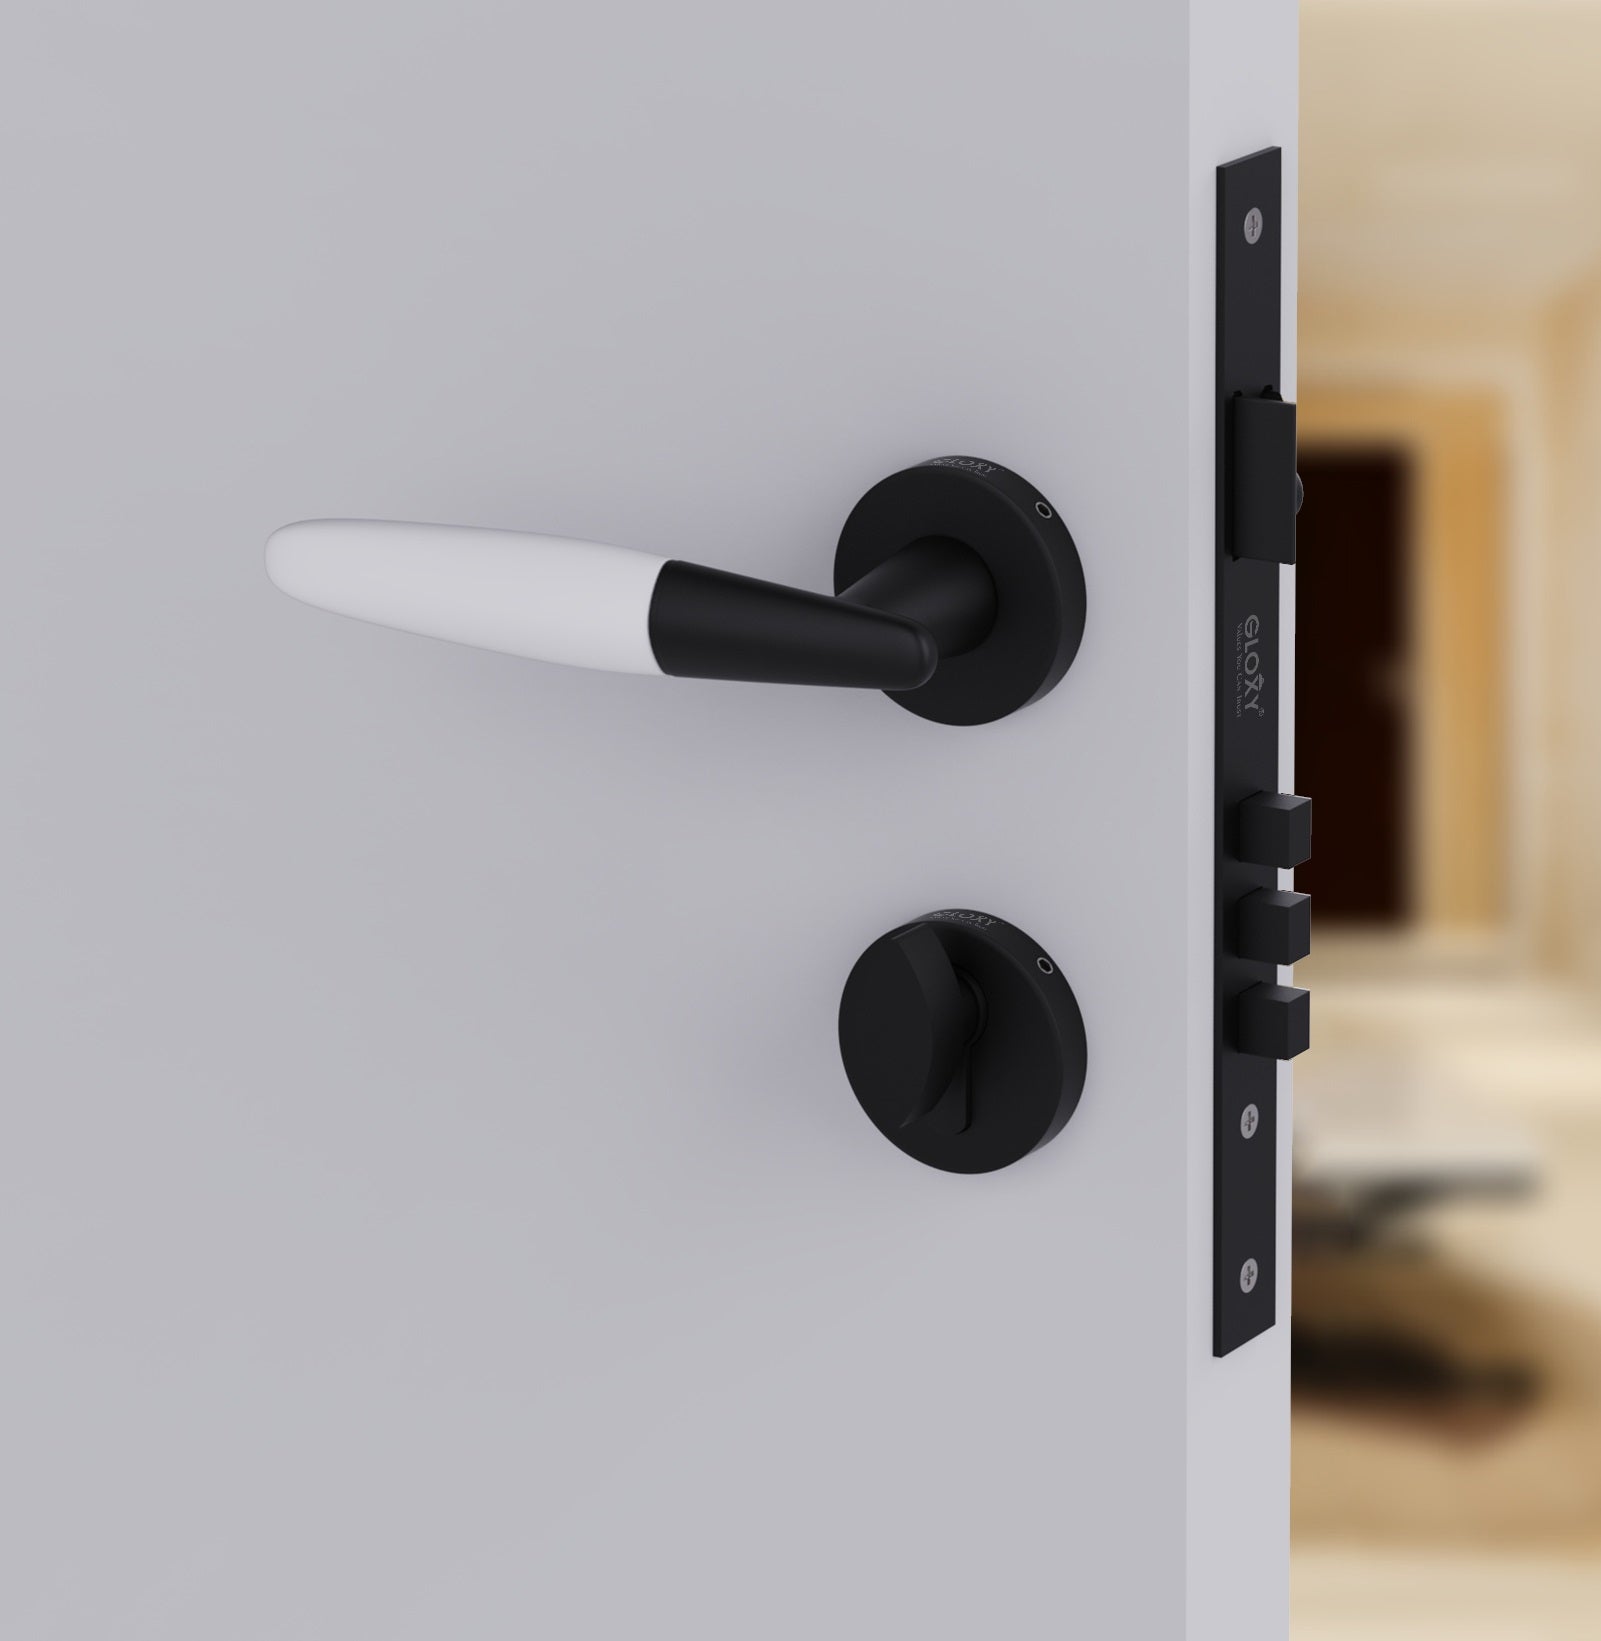 Exclusive Mortise Door Locks for Main Door Lock Handles Set for Home, Bedroom, Hotel, and Office-by GLOXY®